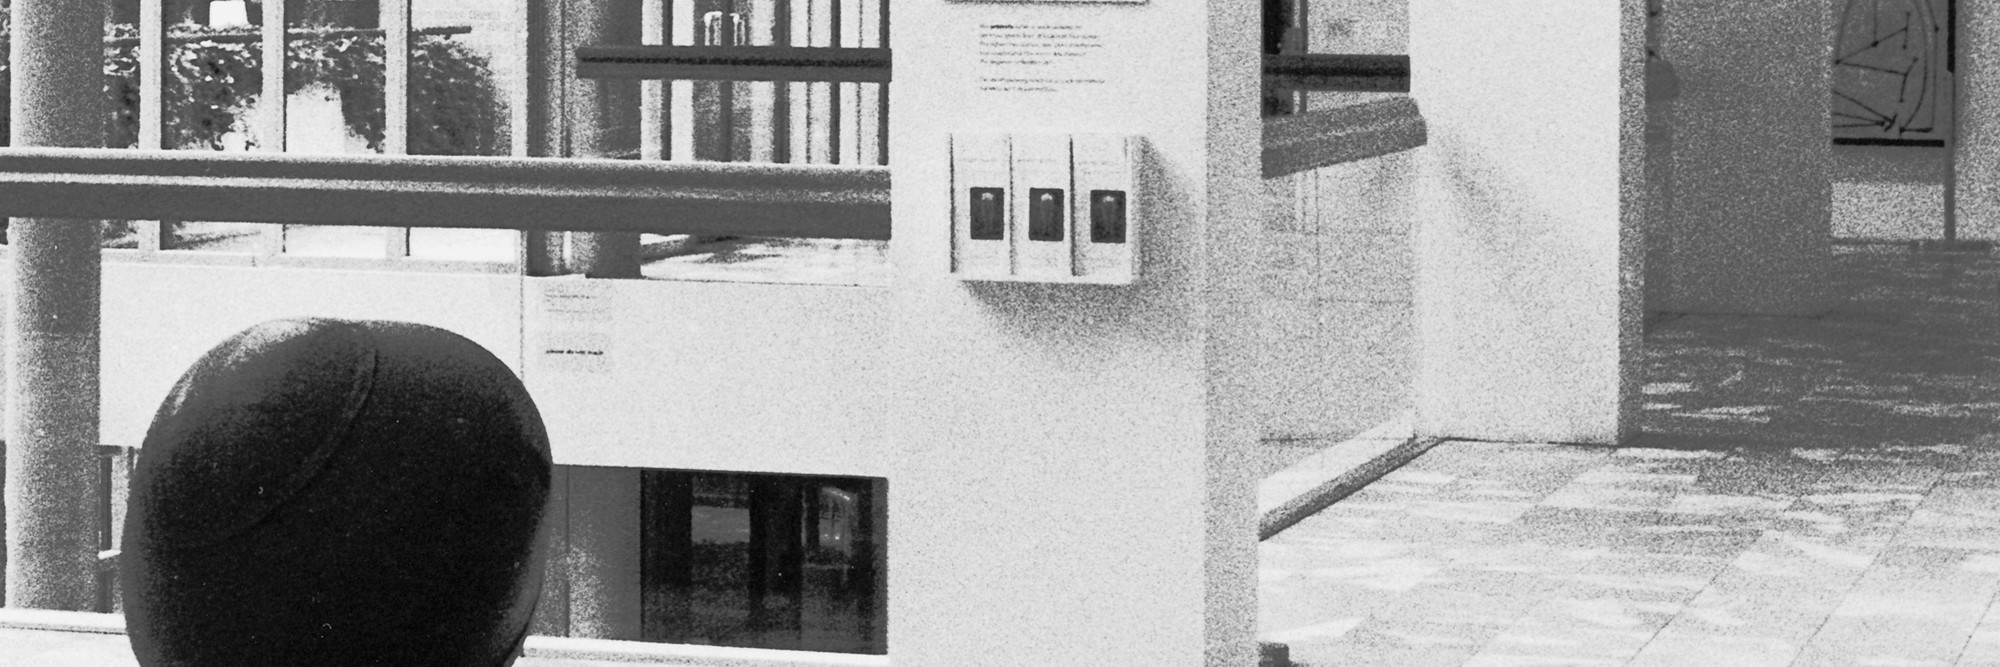 Gabriel Orozco. Naturaleza recuperada (Recaptured Nature). 1990. Vulcanized Rubber. Installation view of Projects 41: Gabriel Orozco at The Museum of Modern Art, New York. Photo: Mali Olatunji